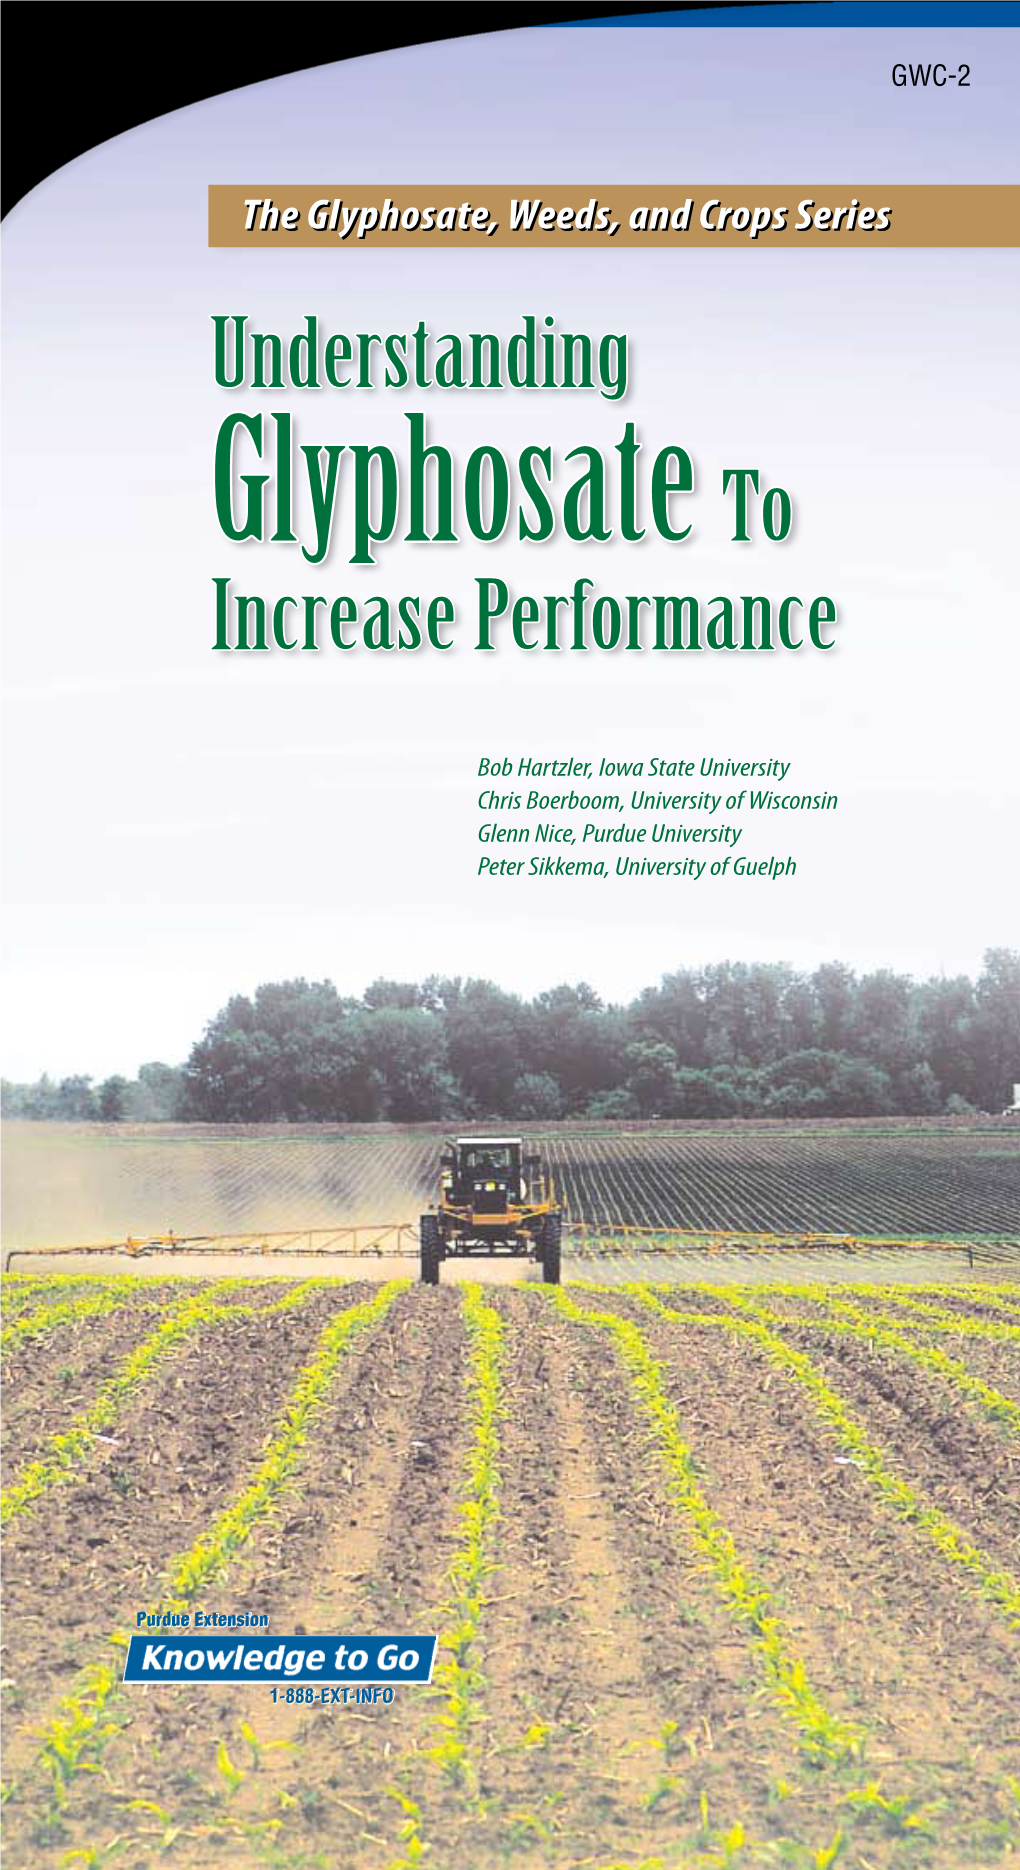 GWC-2, Understanding Glyphosate to Increase Performance